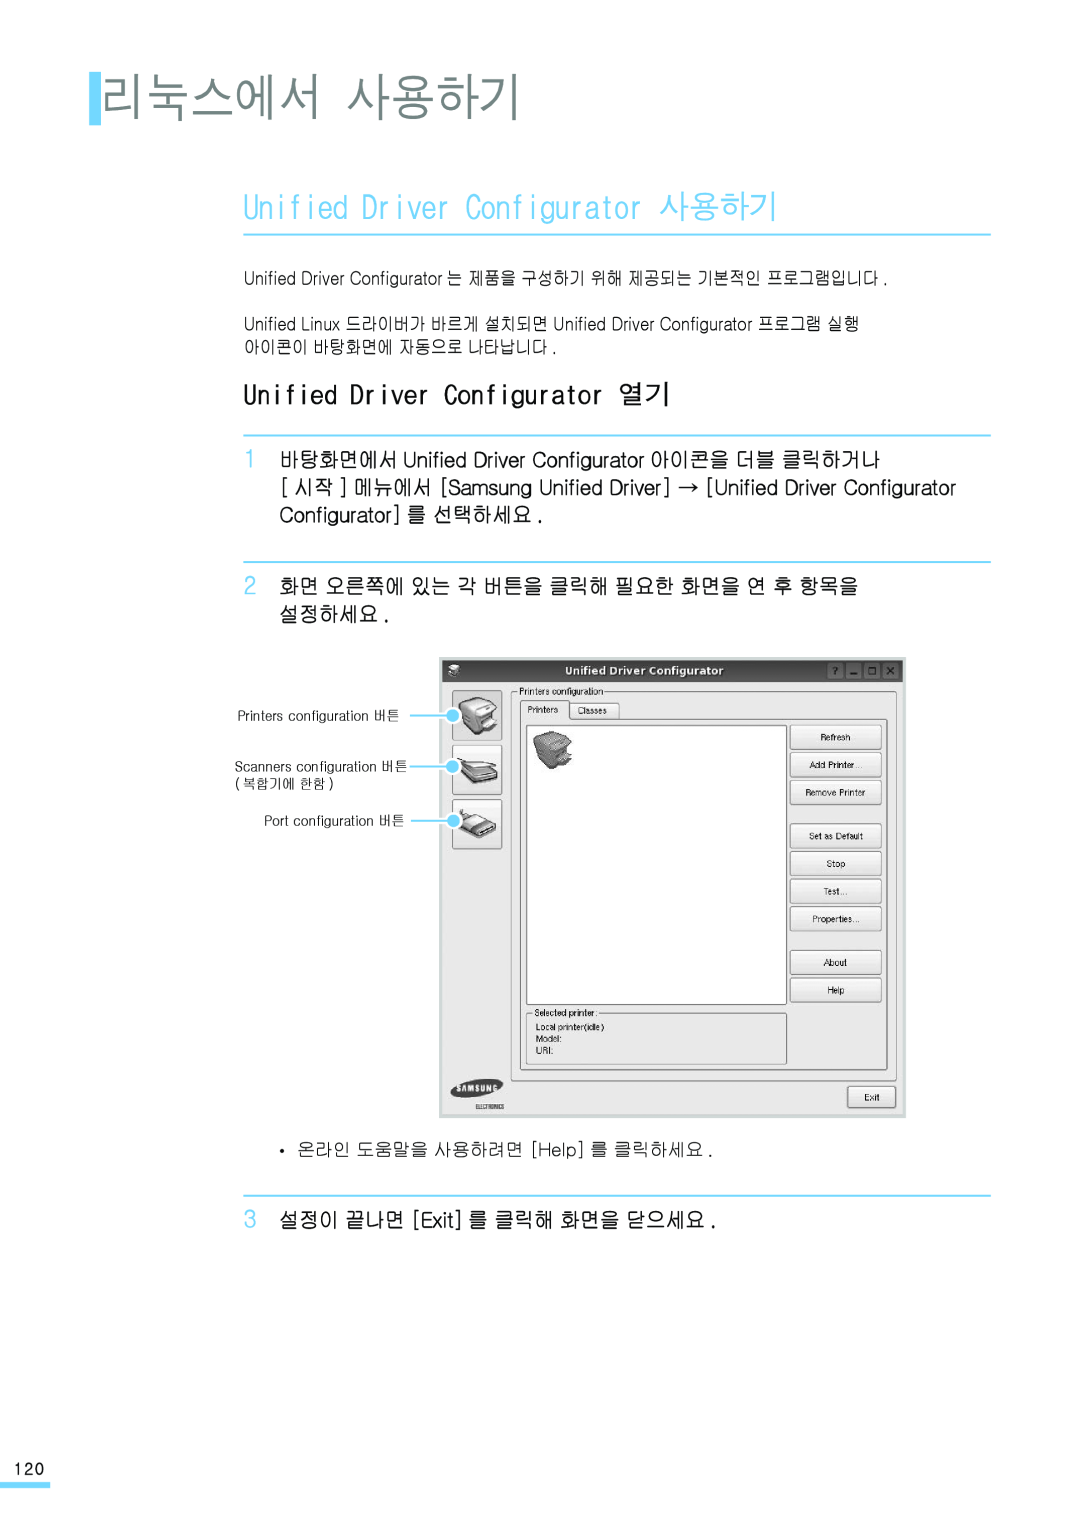 Samsung ML-2571N manual Unified Driver Configurator 열기, 리눅스에서 사용하기, Unified Driver Configurator 사용하기 